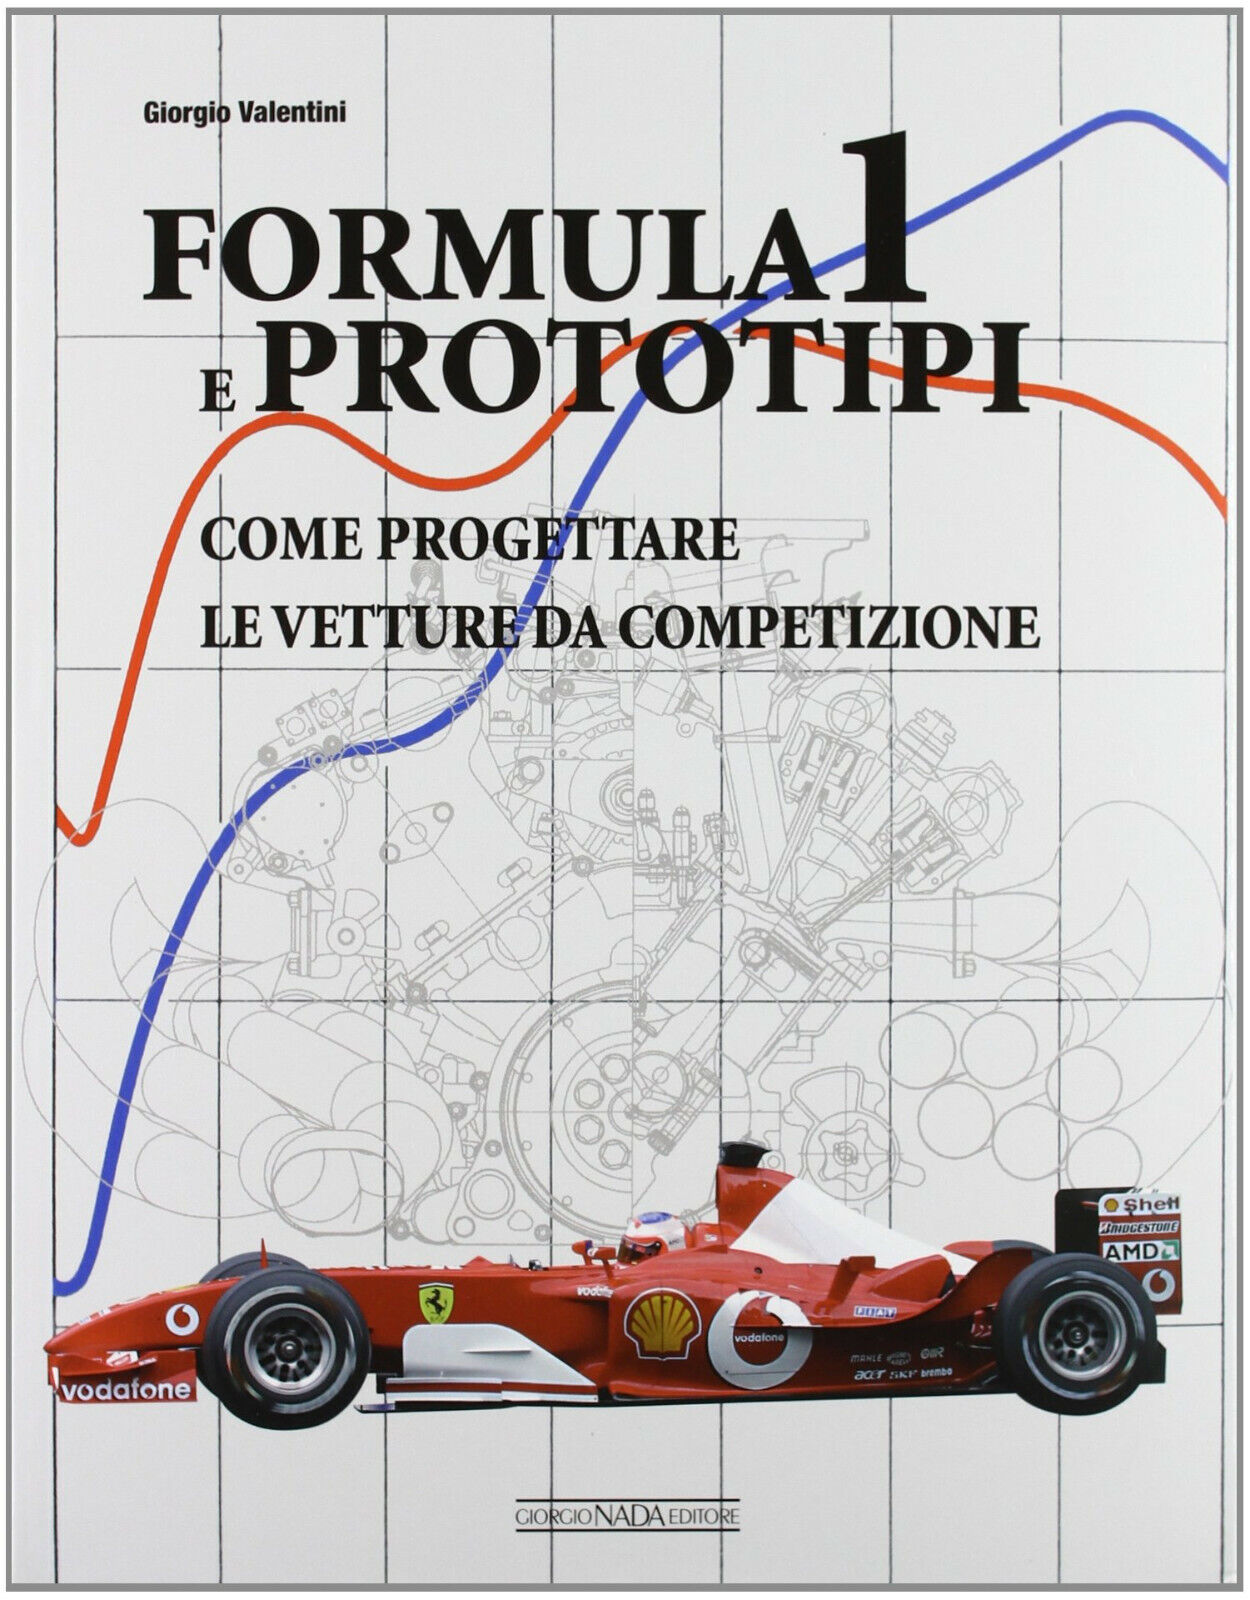 Formula 1 e prototipi - Giorgio Valentini - Nada, 2008